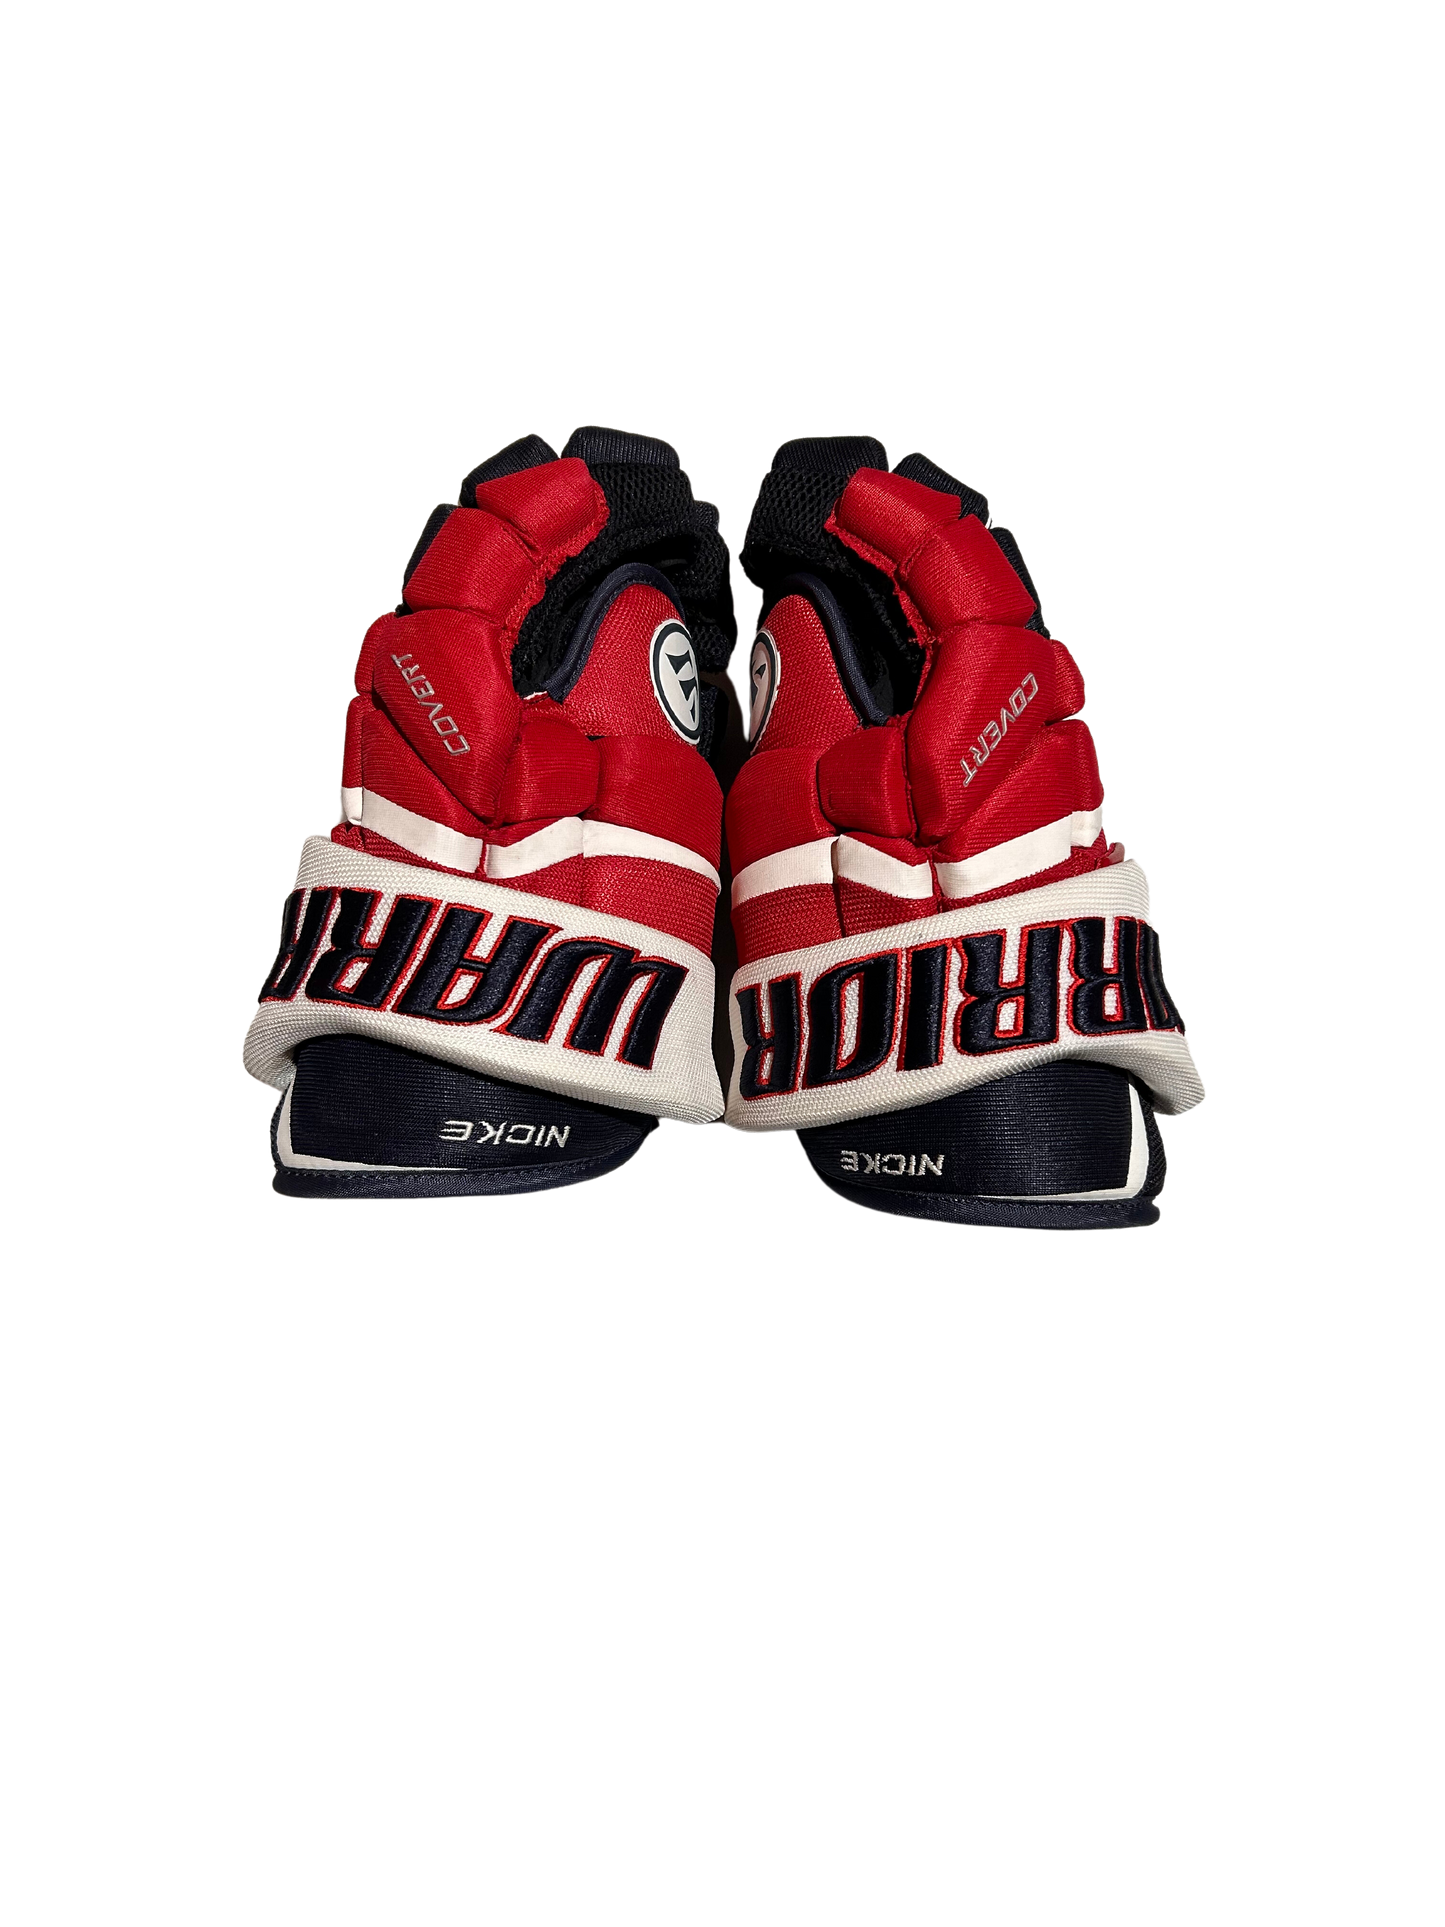 New Backstrom Washington Capitals 13" Warrior Covert Pro Gloves